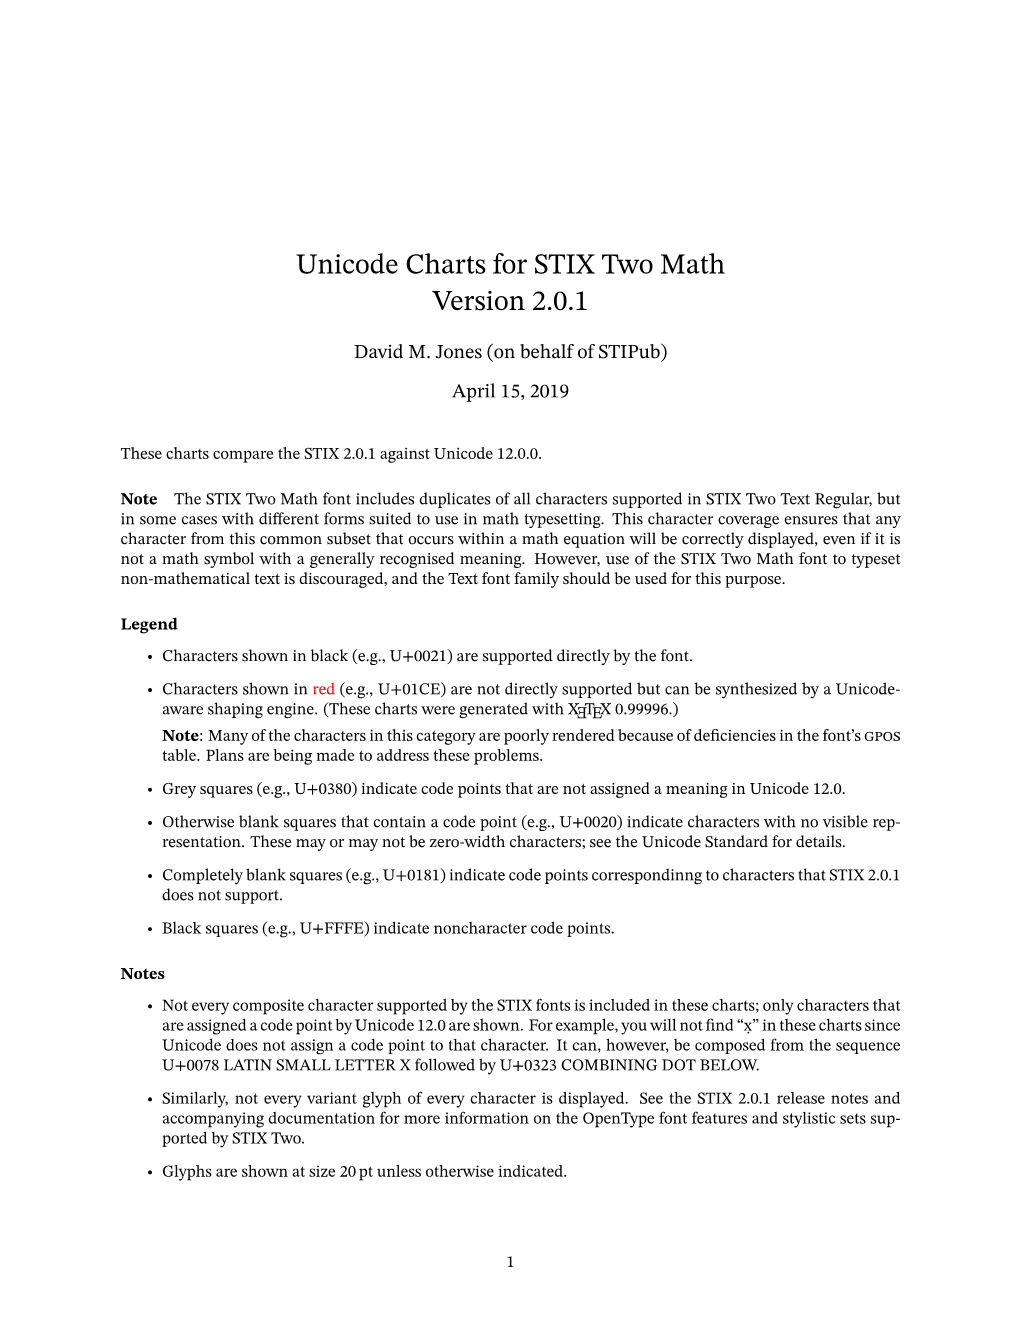 Unicode Charts for STIX Two Math Version 2.0.1